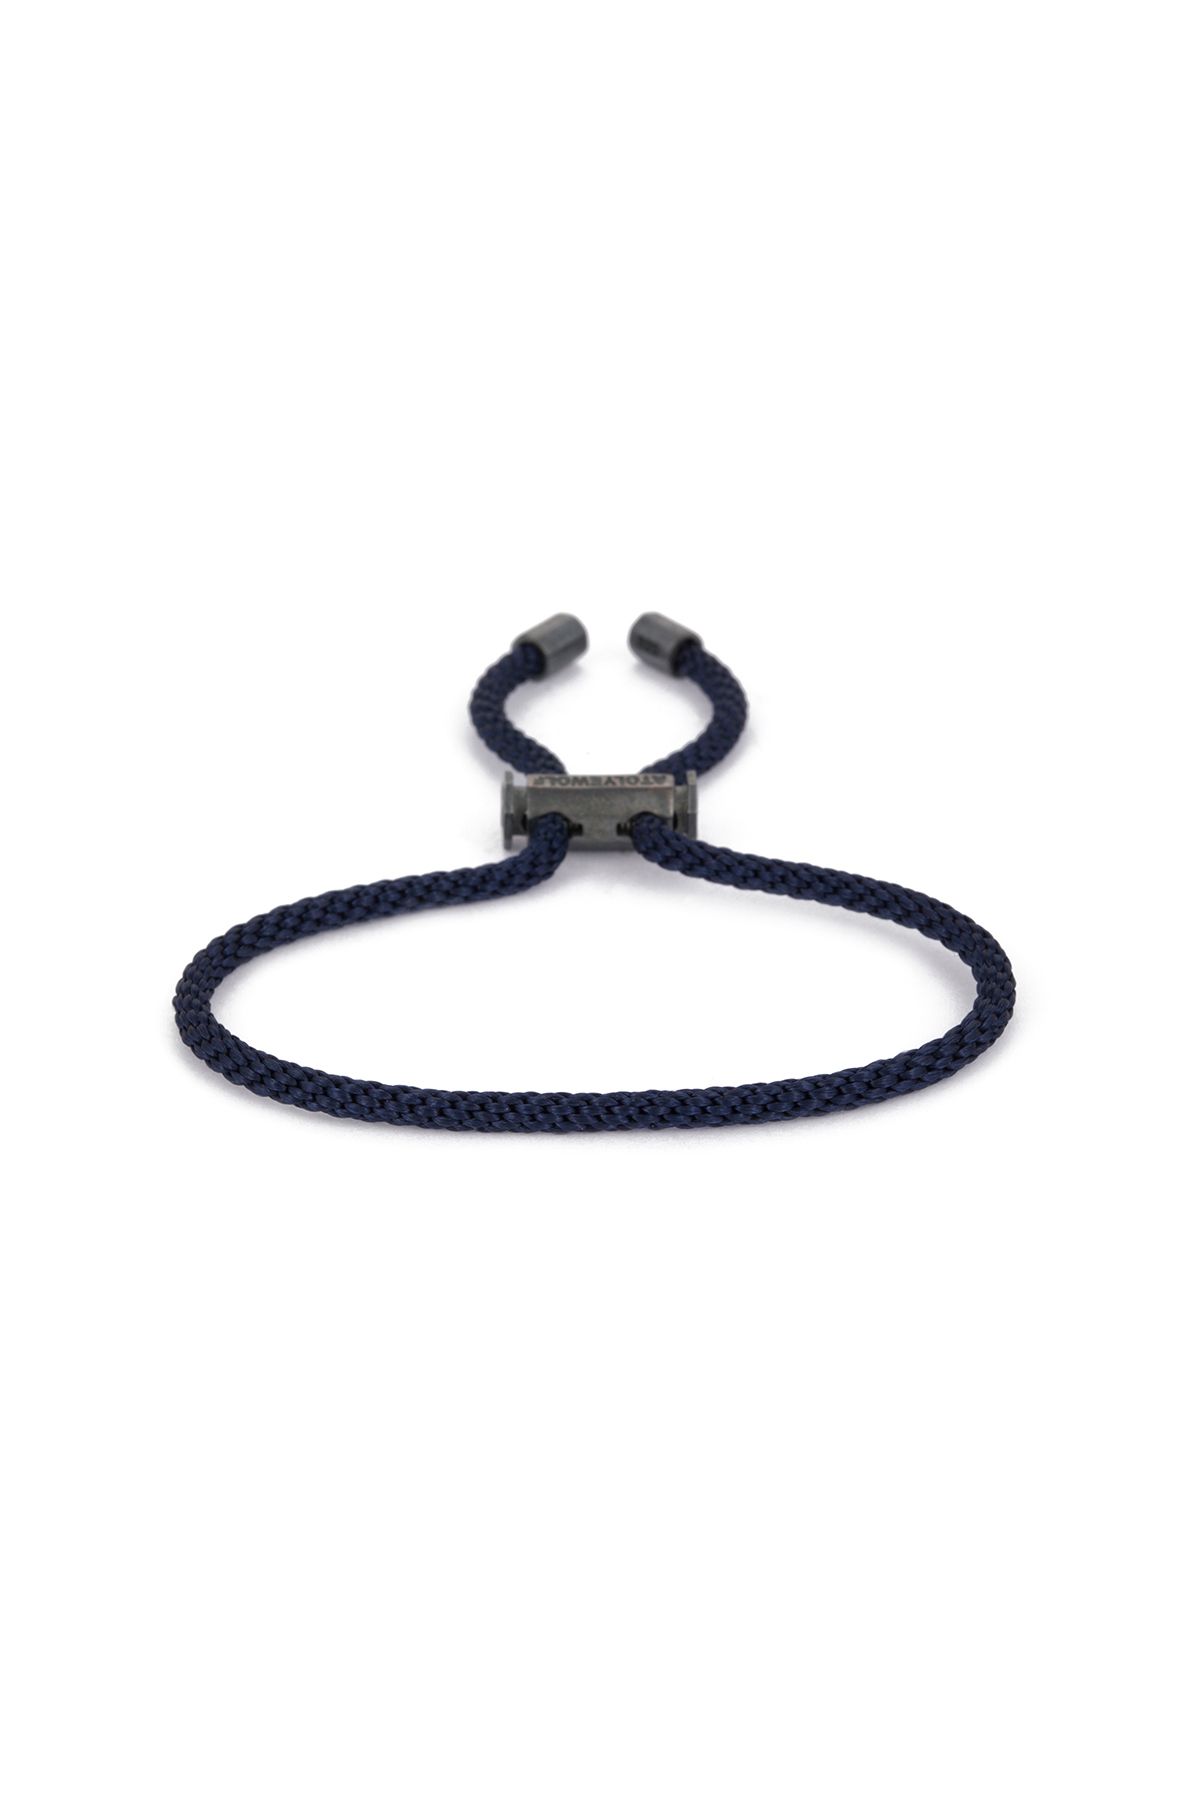 Atolyewolf Navy Blue Lace Bracelet in Oxide